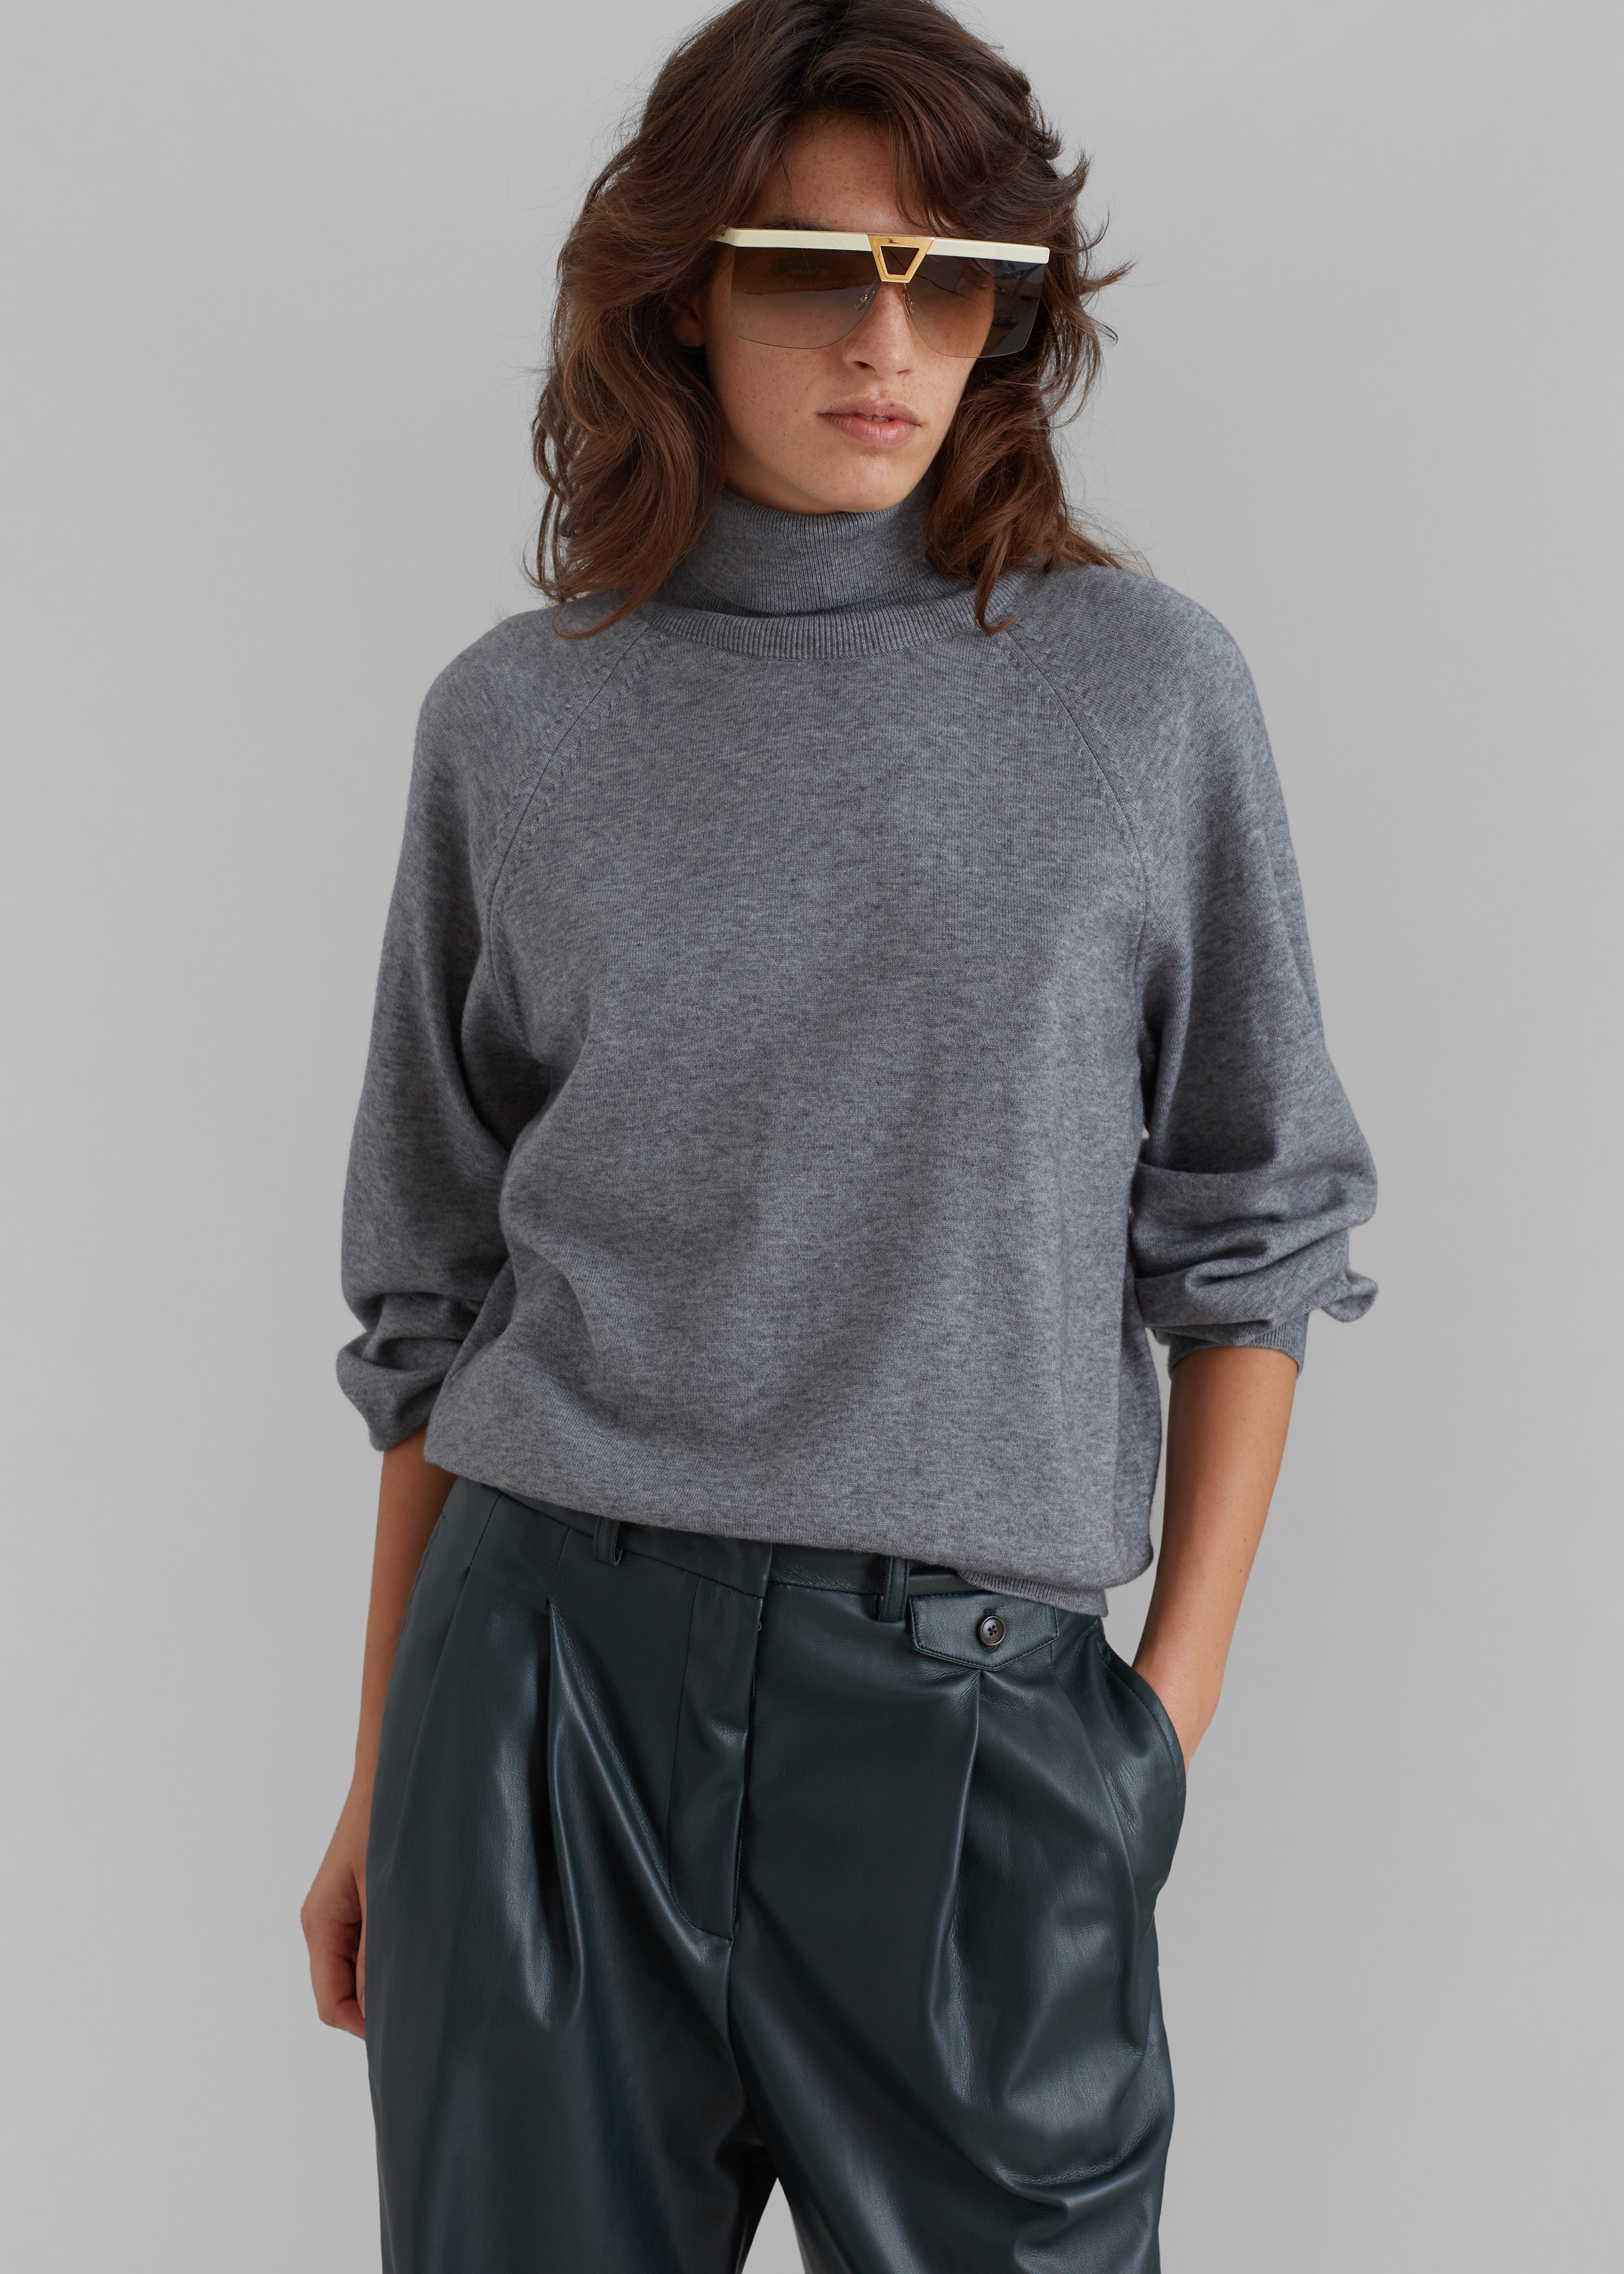 Variel Turtleneck Sweater - Charcoal - 1